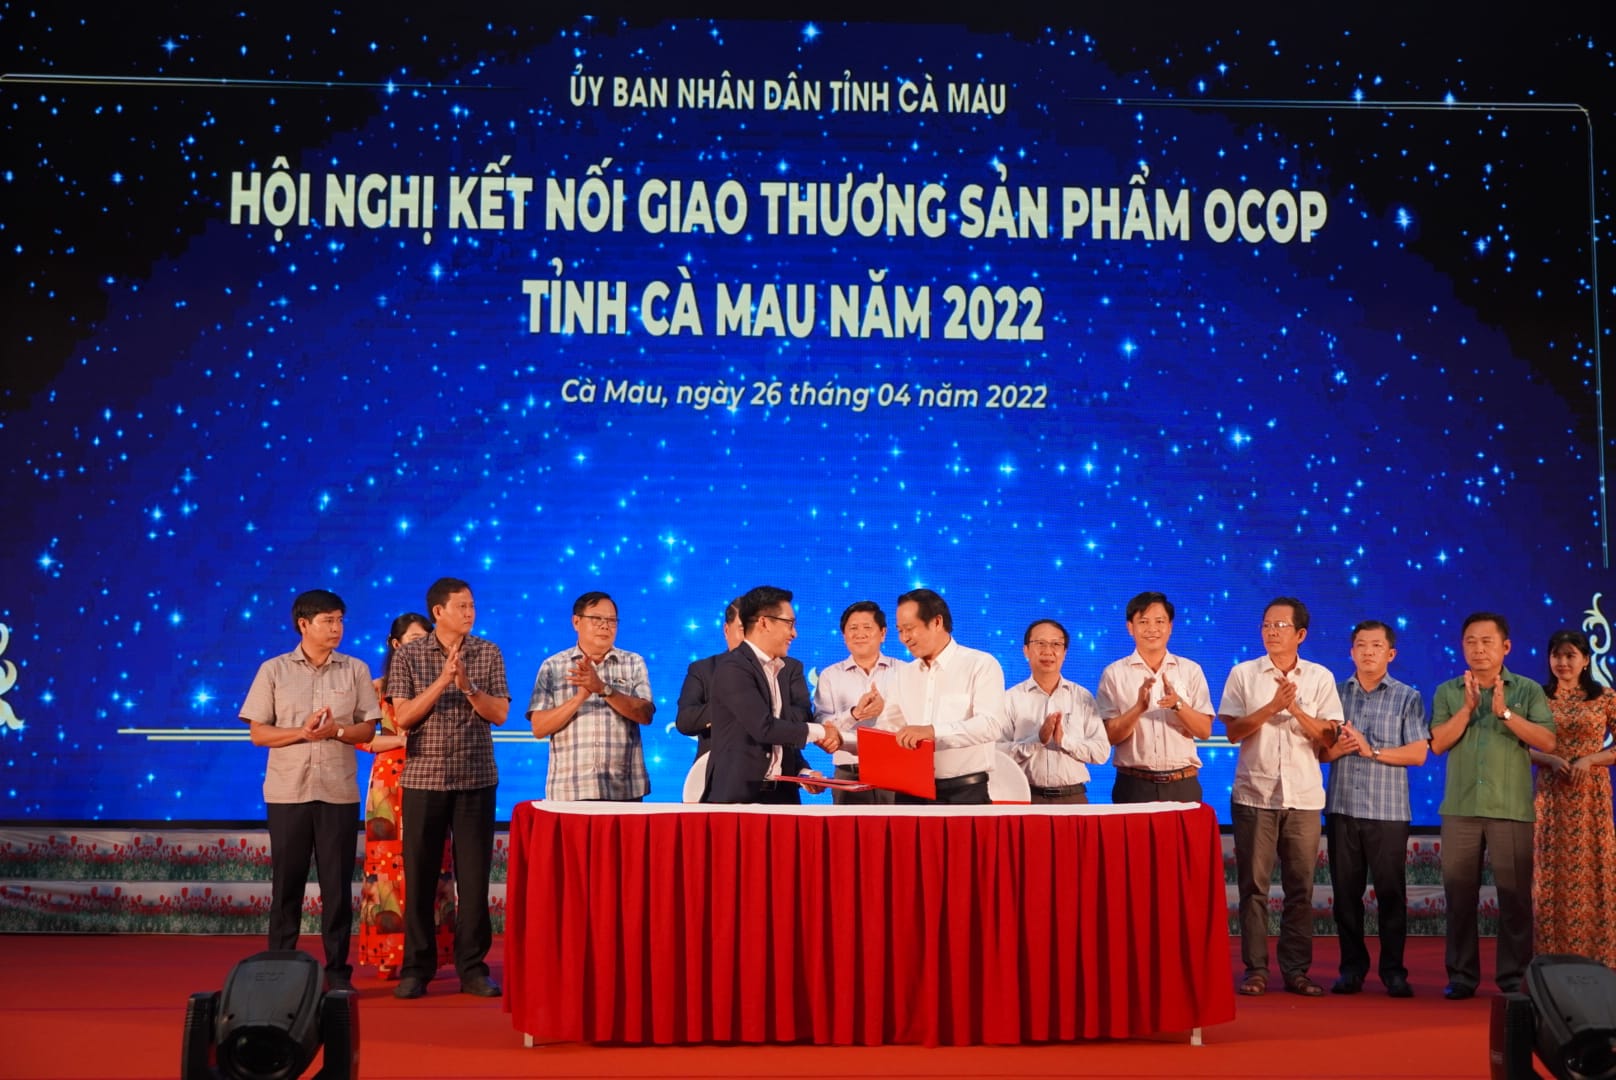 Central Retail in Vietnam participates in  OCOP Ca Mau event